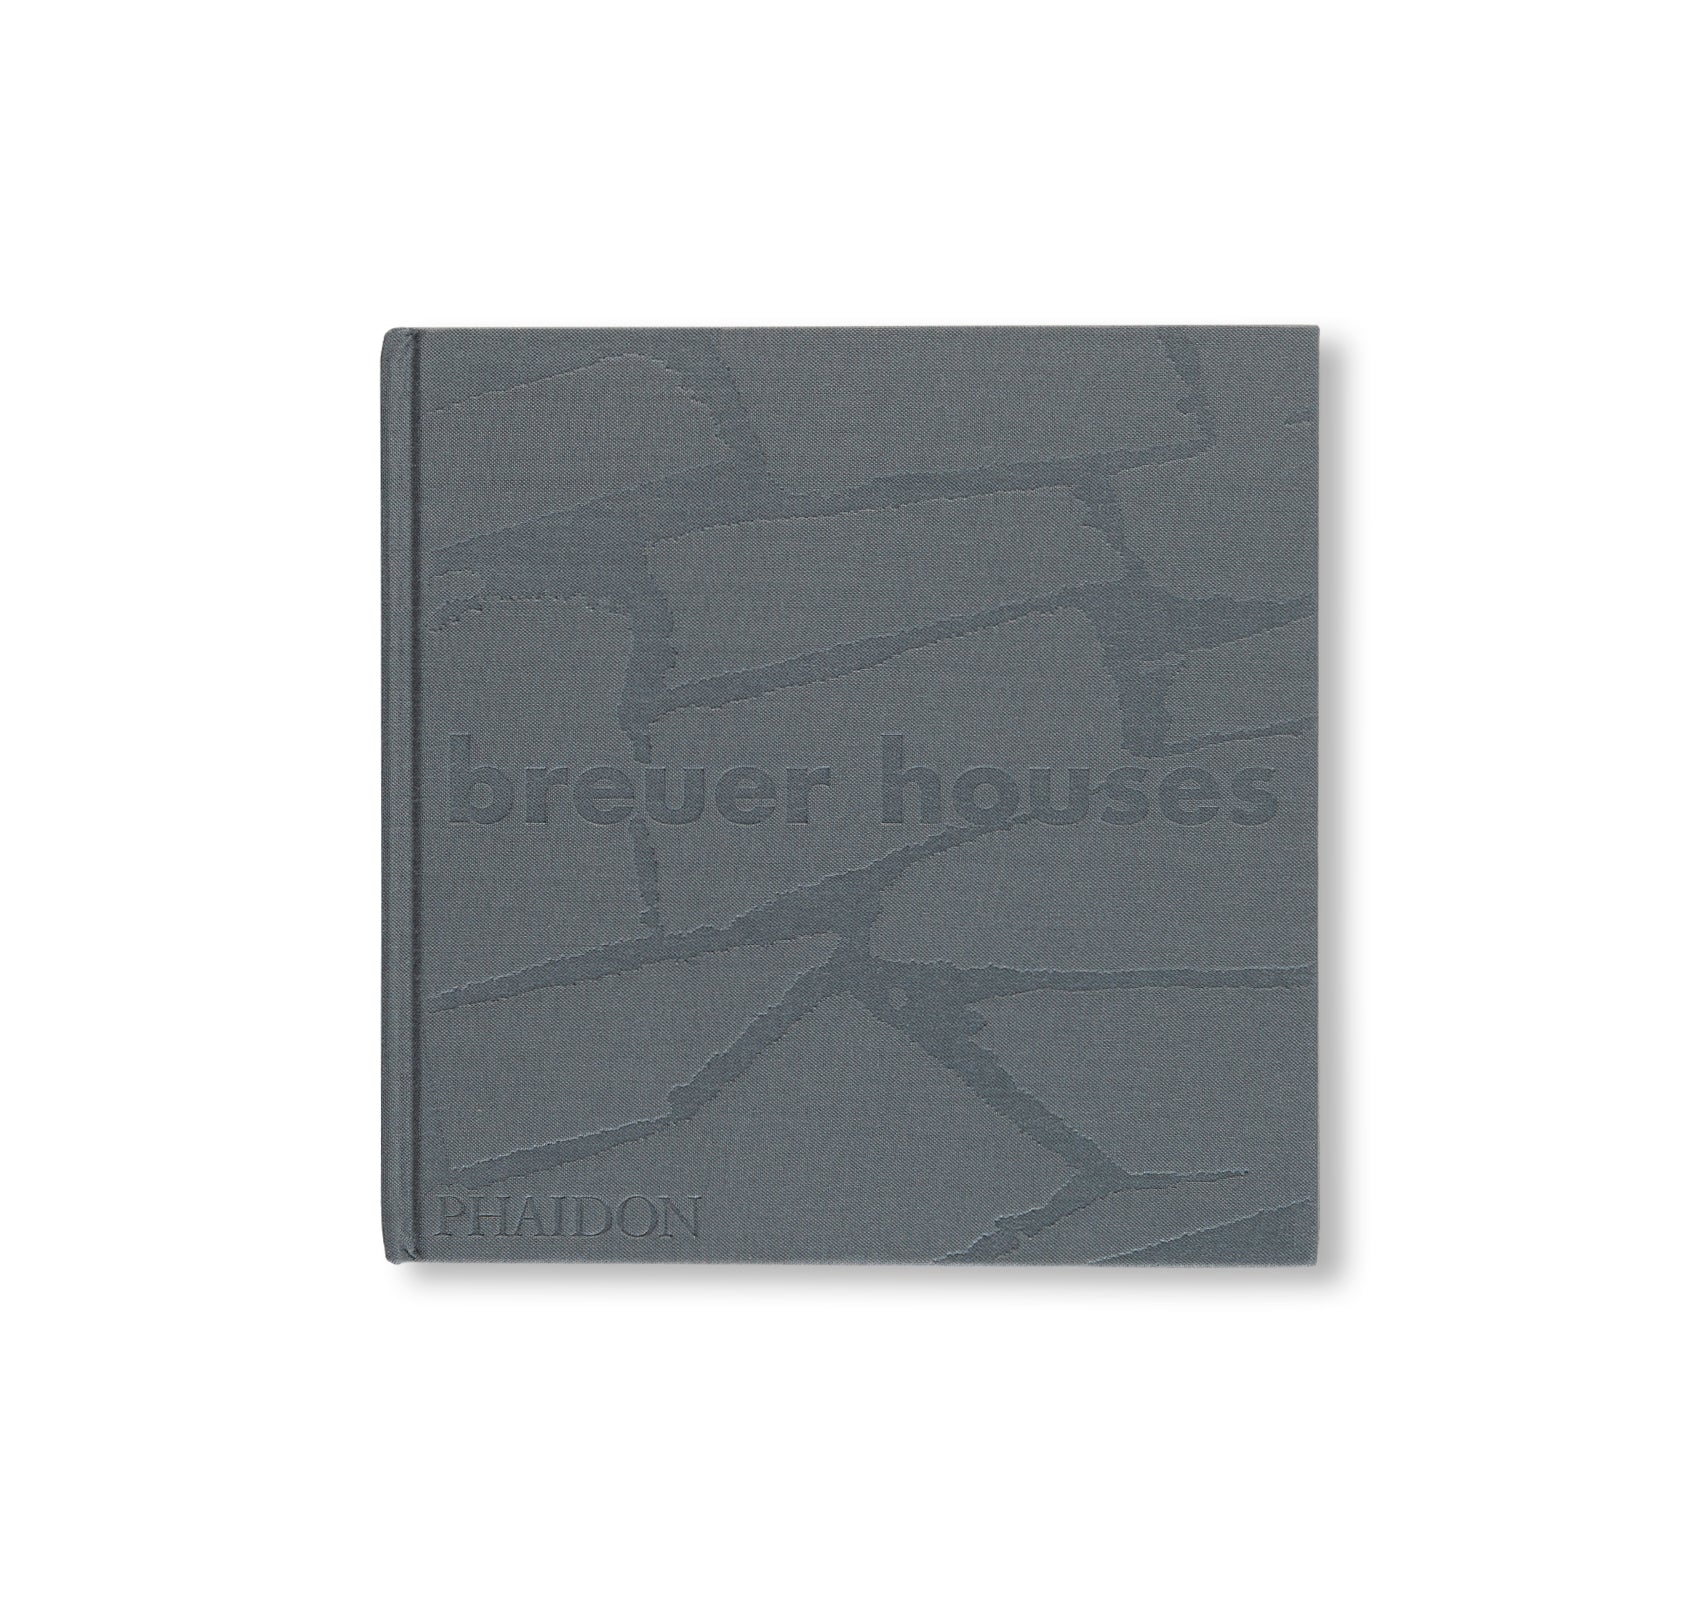 BREUER HOUSES by Marcel Breuer